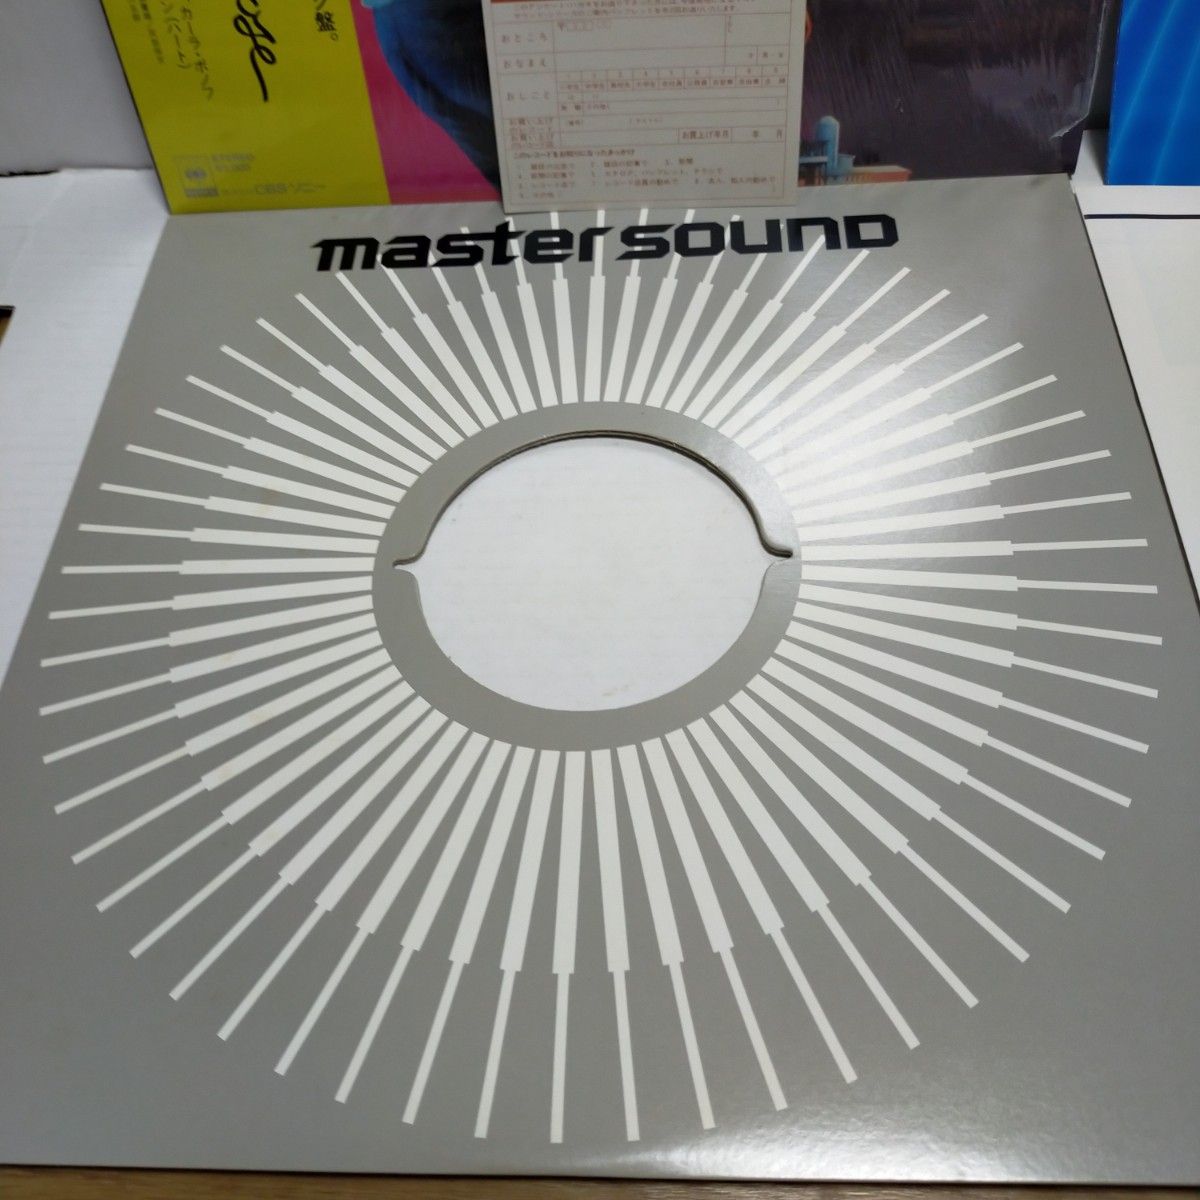 Master Sound盤 帯付LP/O.S.T「Footloose フットルース」30AP-2797+シングルEPセット